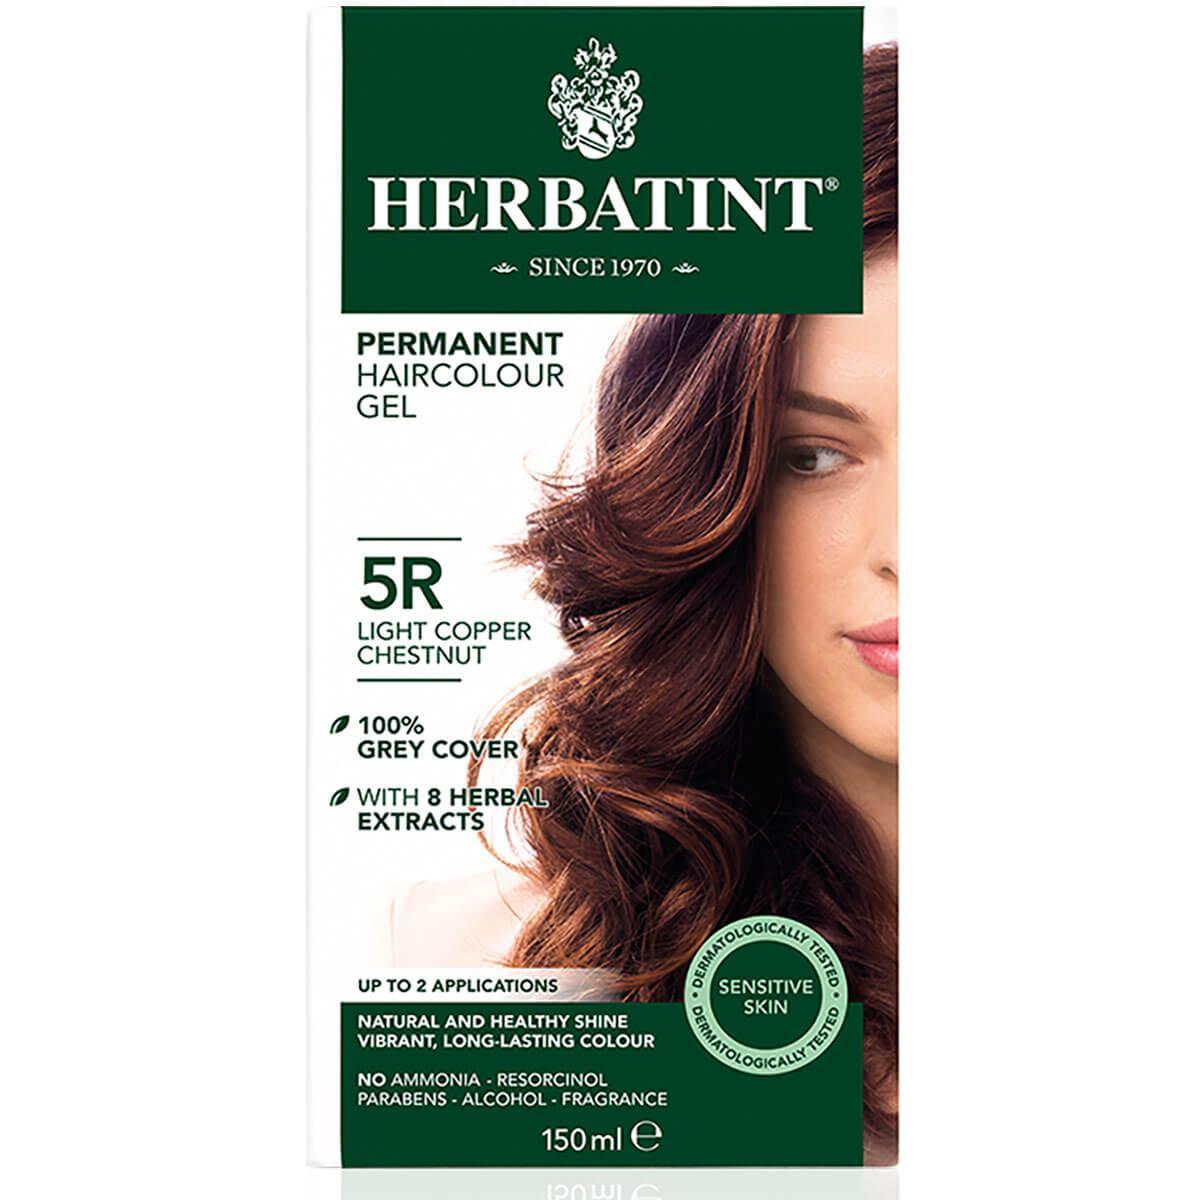 Chestnut, Light Copper (5R) - Herbatint Permanent Hair Colour Gel